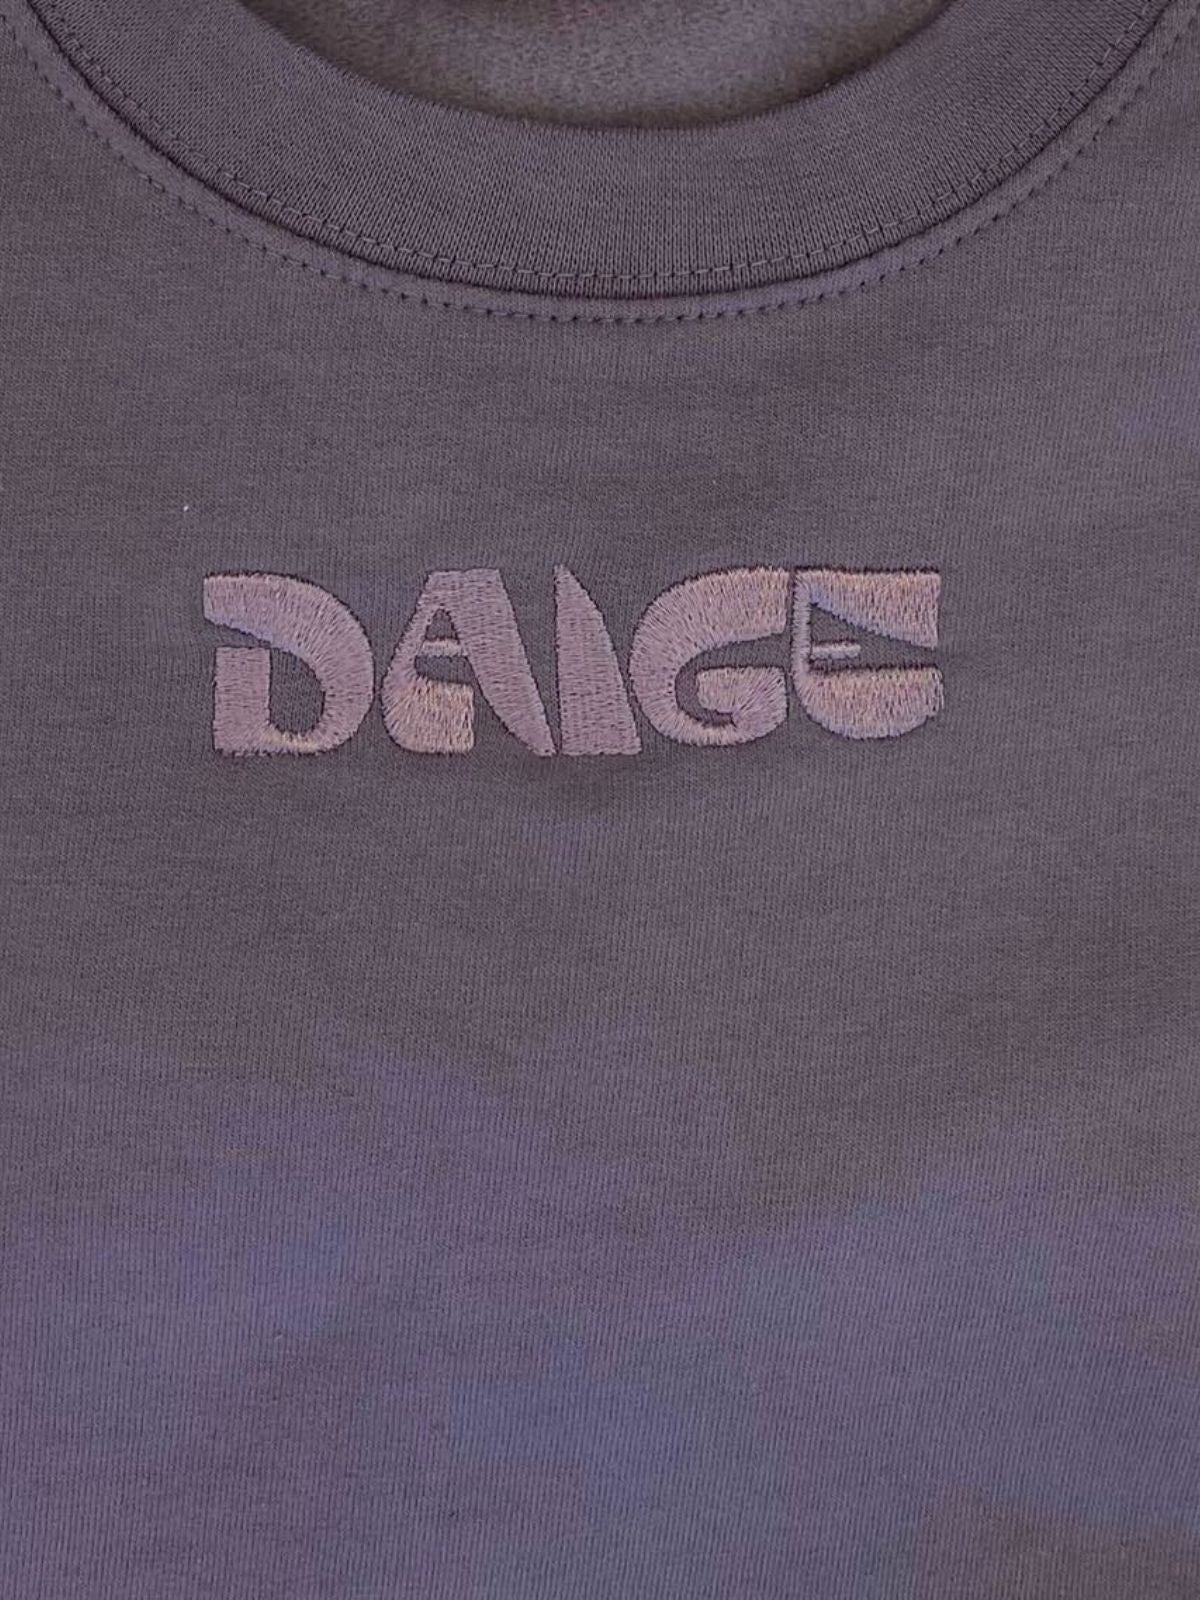 DAIGE logo sweater - Dusty lilac